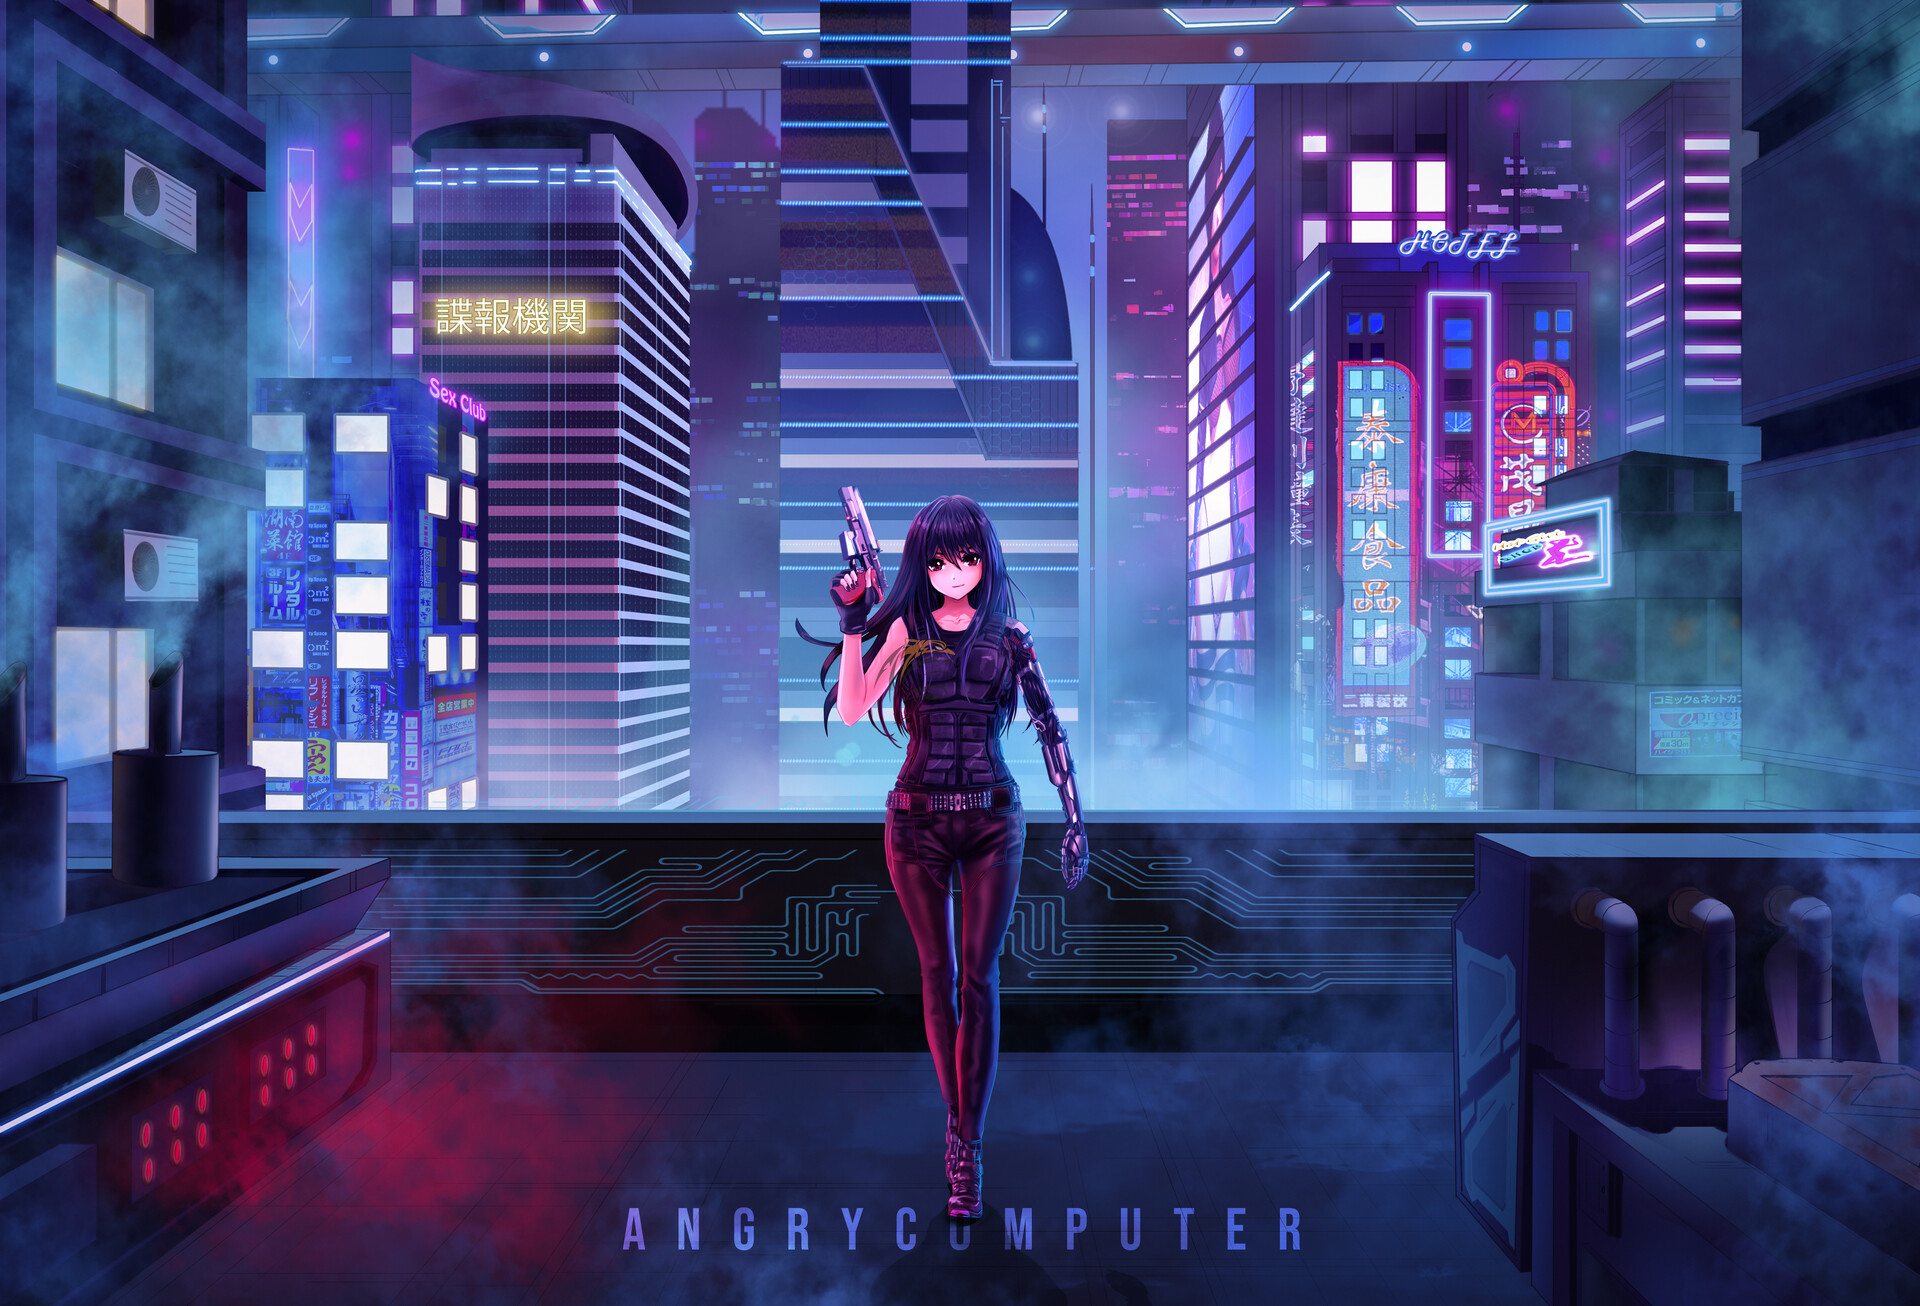 ArtStation - Cyberpunk girl